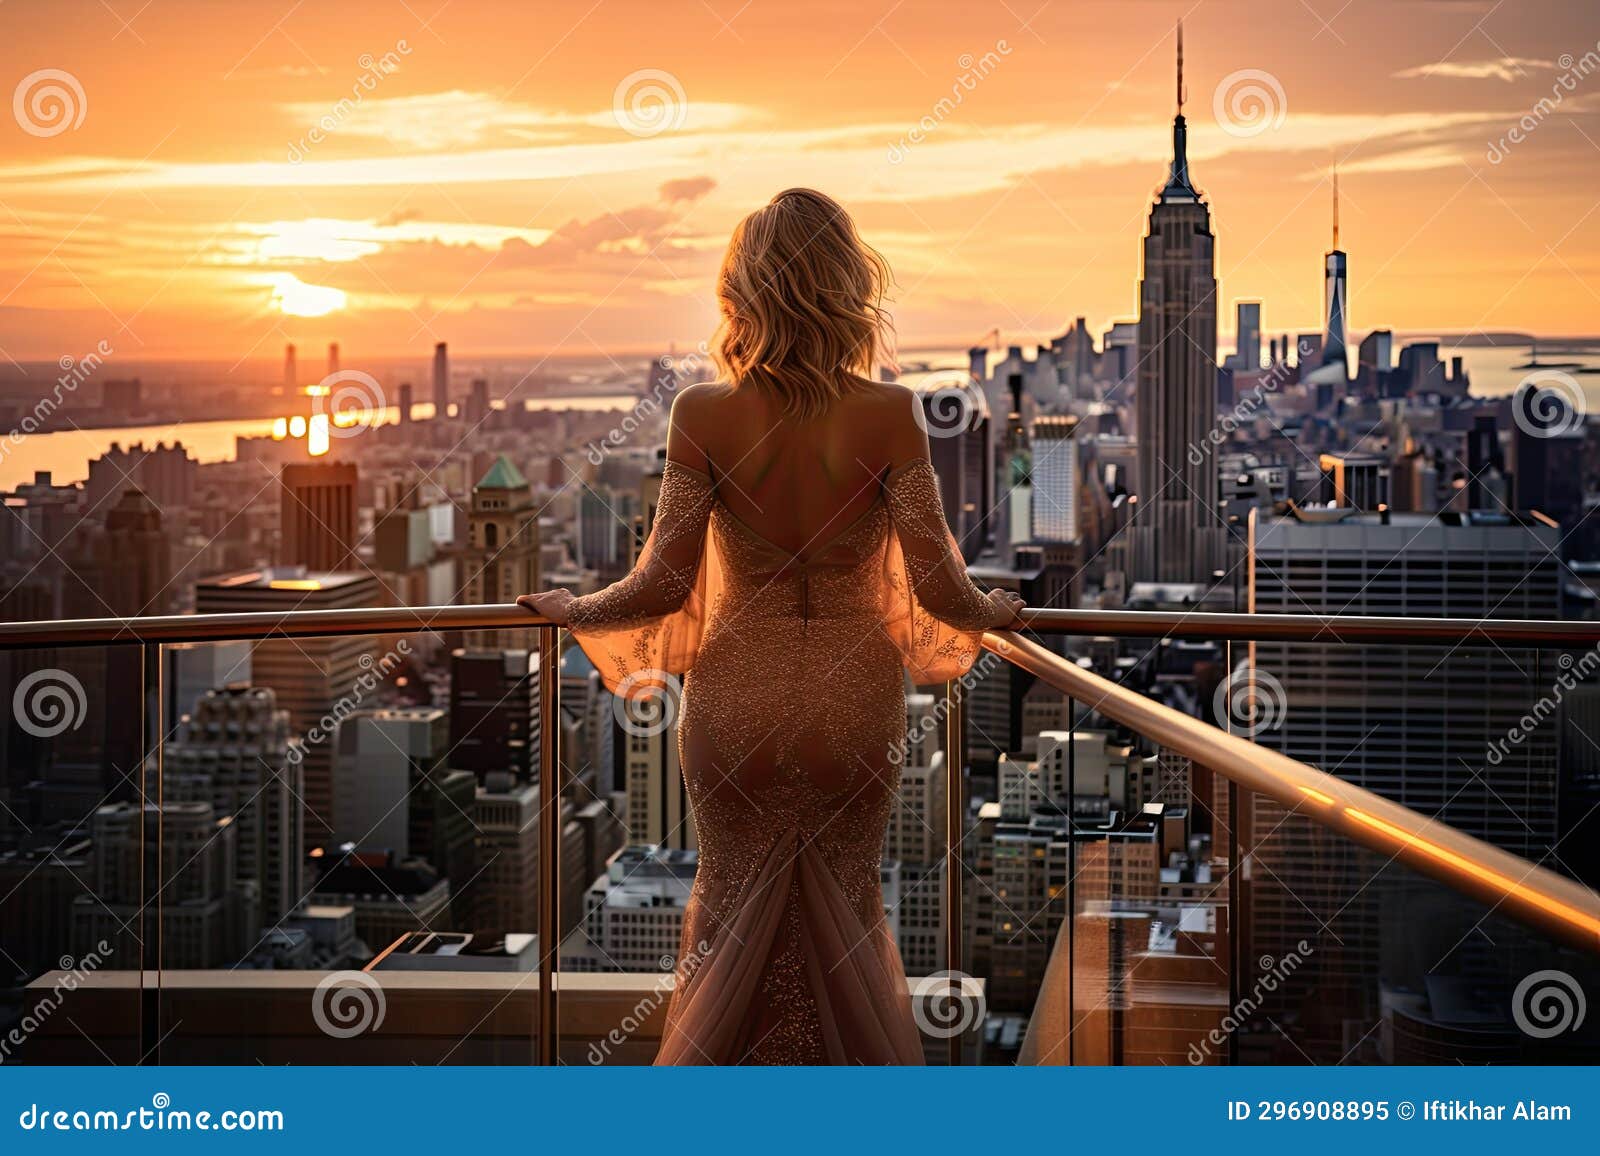 Luxurious Woman Big Chest On Balcony Stock Photo 757741222